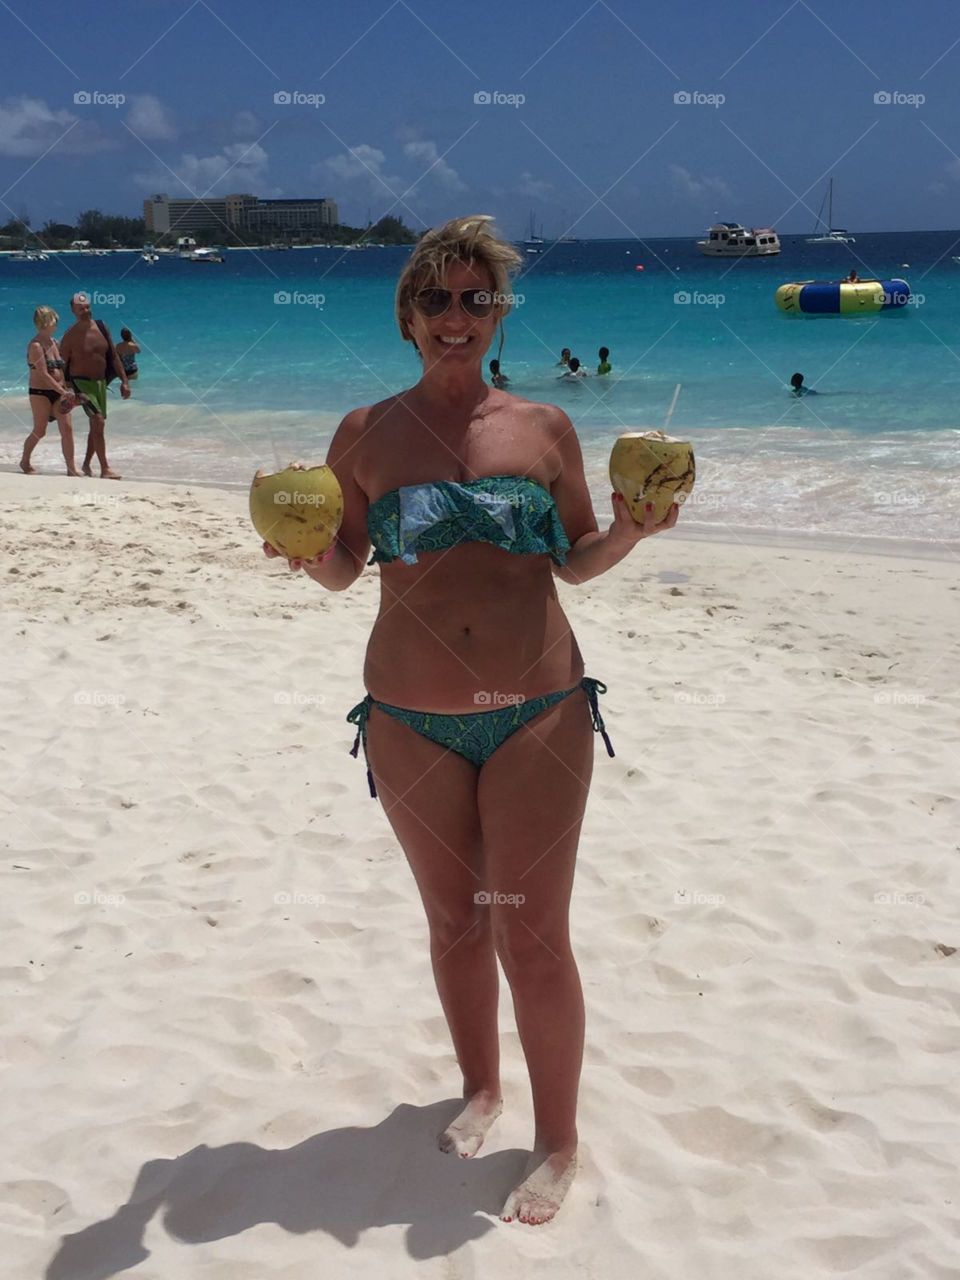 Selling coconuts in Barbados